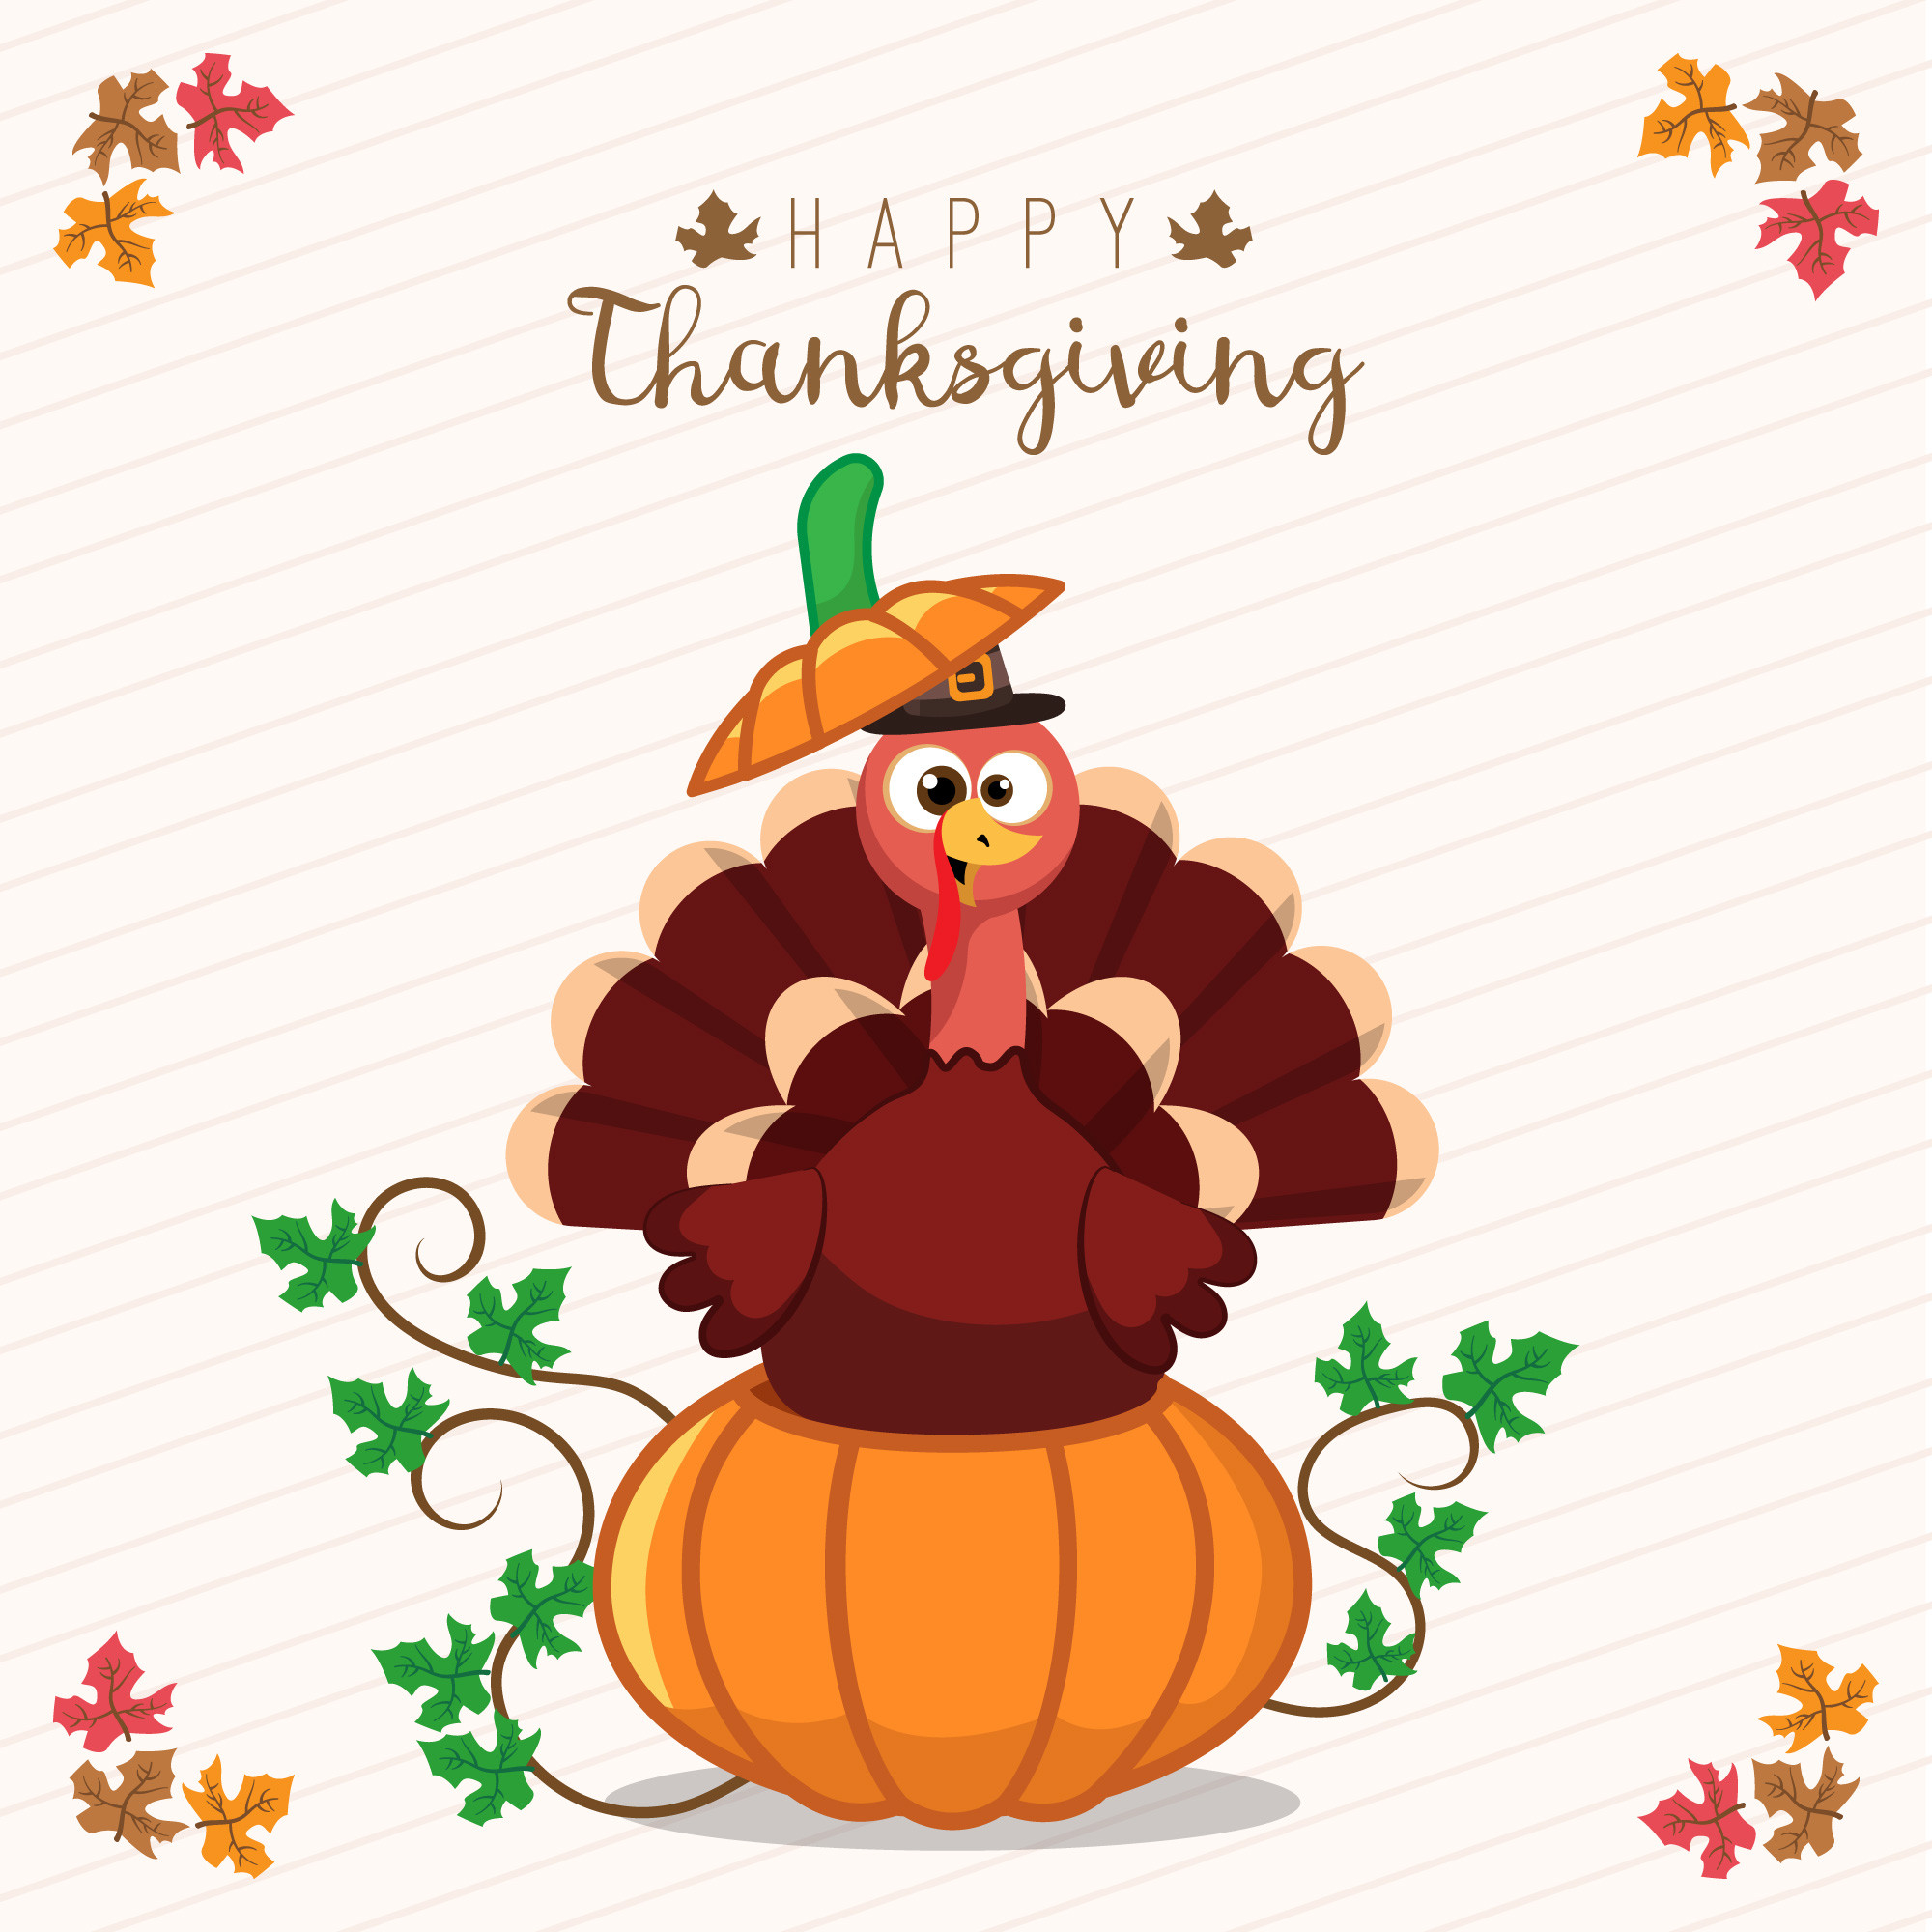 Thanksgiving Turkey Cartoon
 Thanksgiving greeting card with a turkey and pumpkin